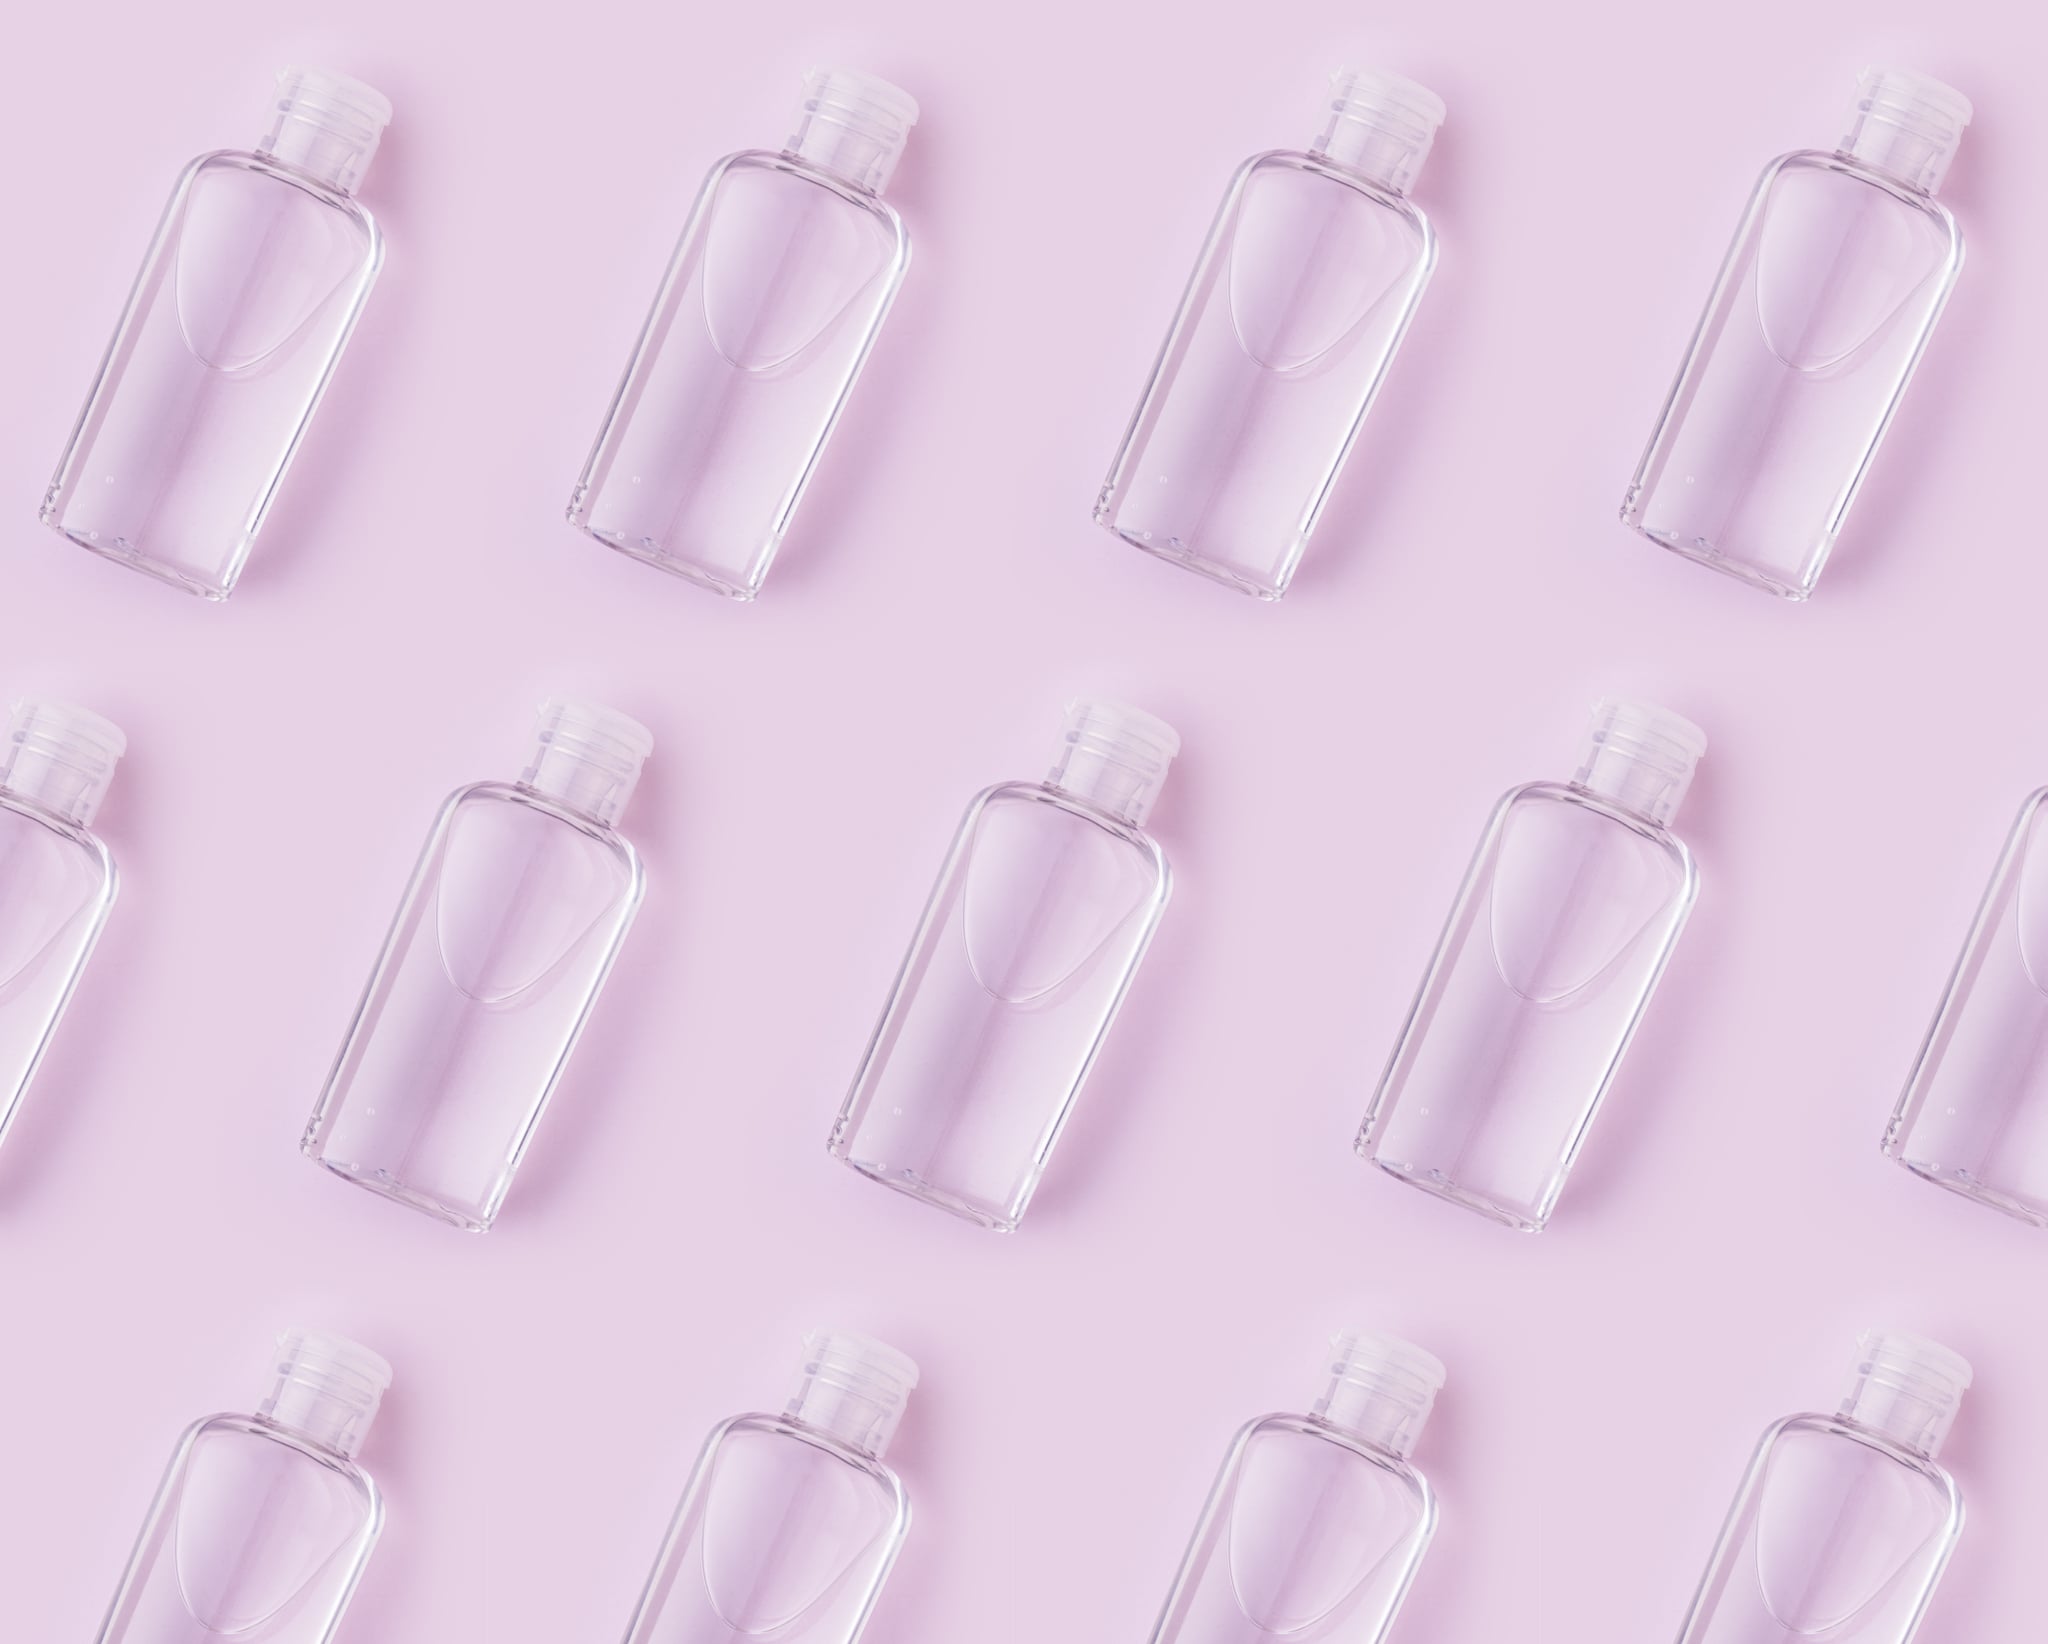 Hand sanitizer or soap bottles over pink background, making a pattern.